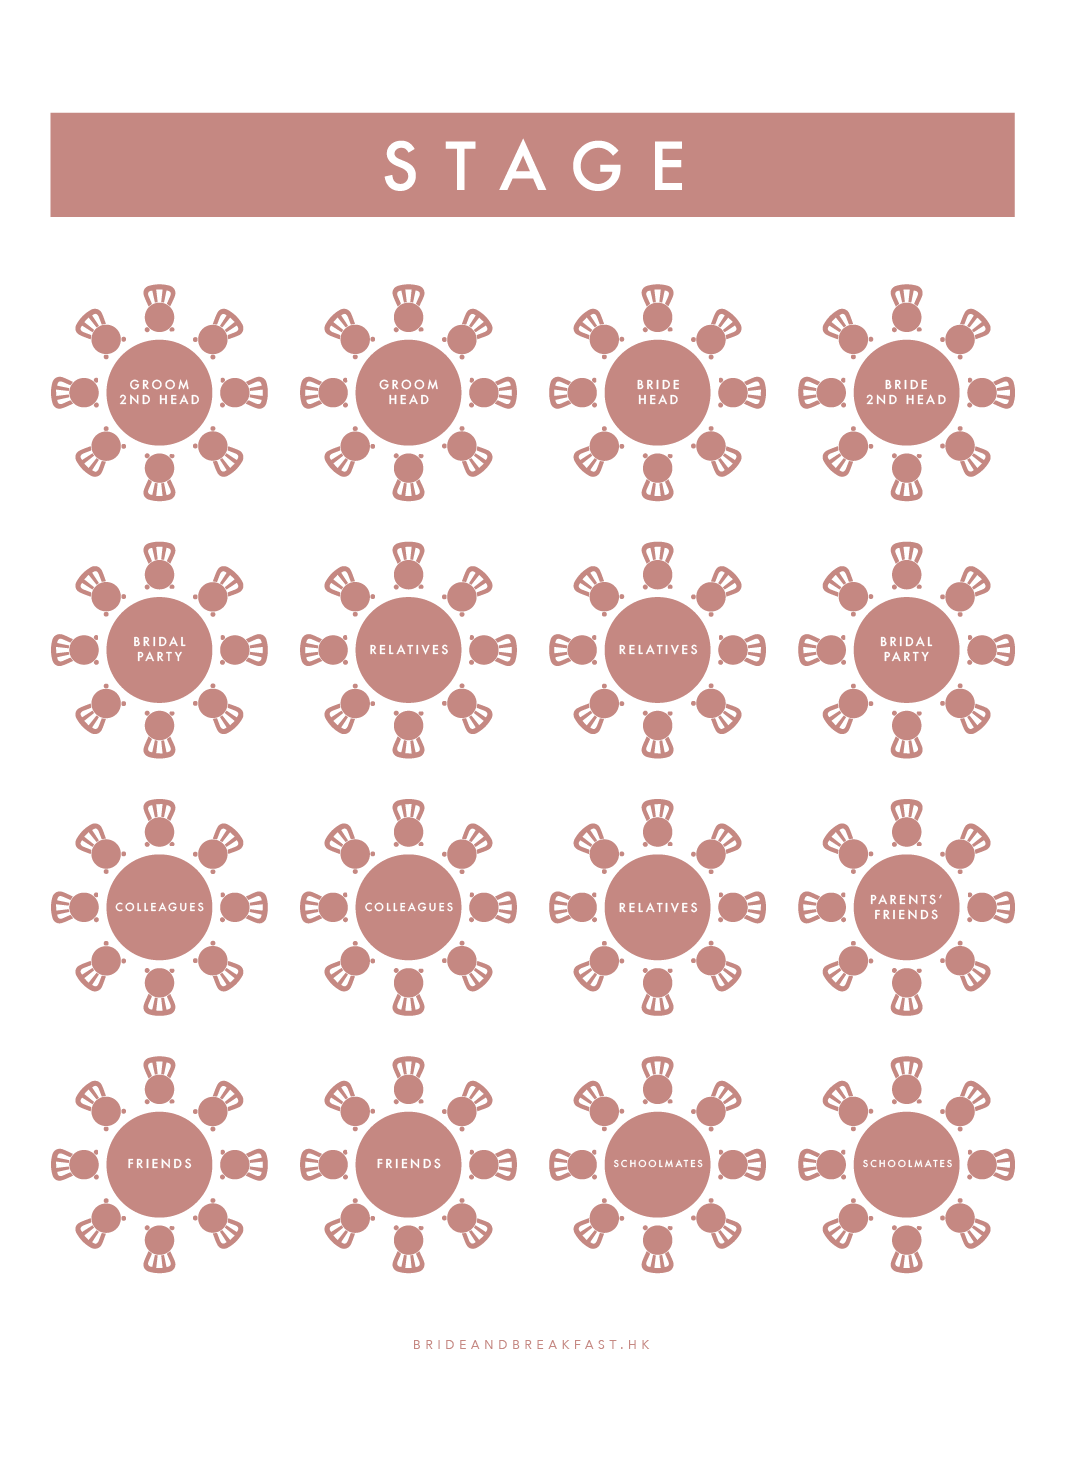 Bridal Party Seating Chart